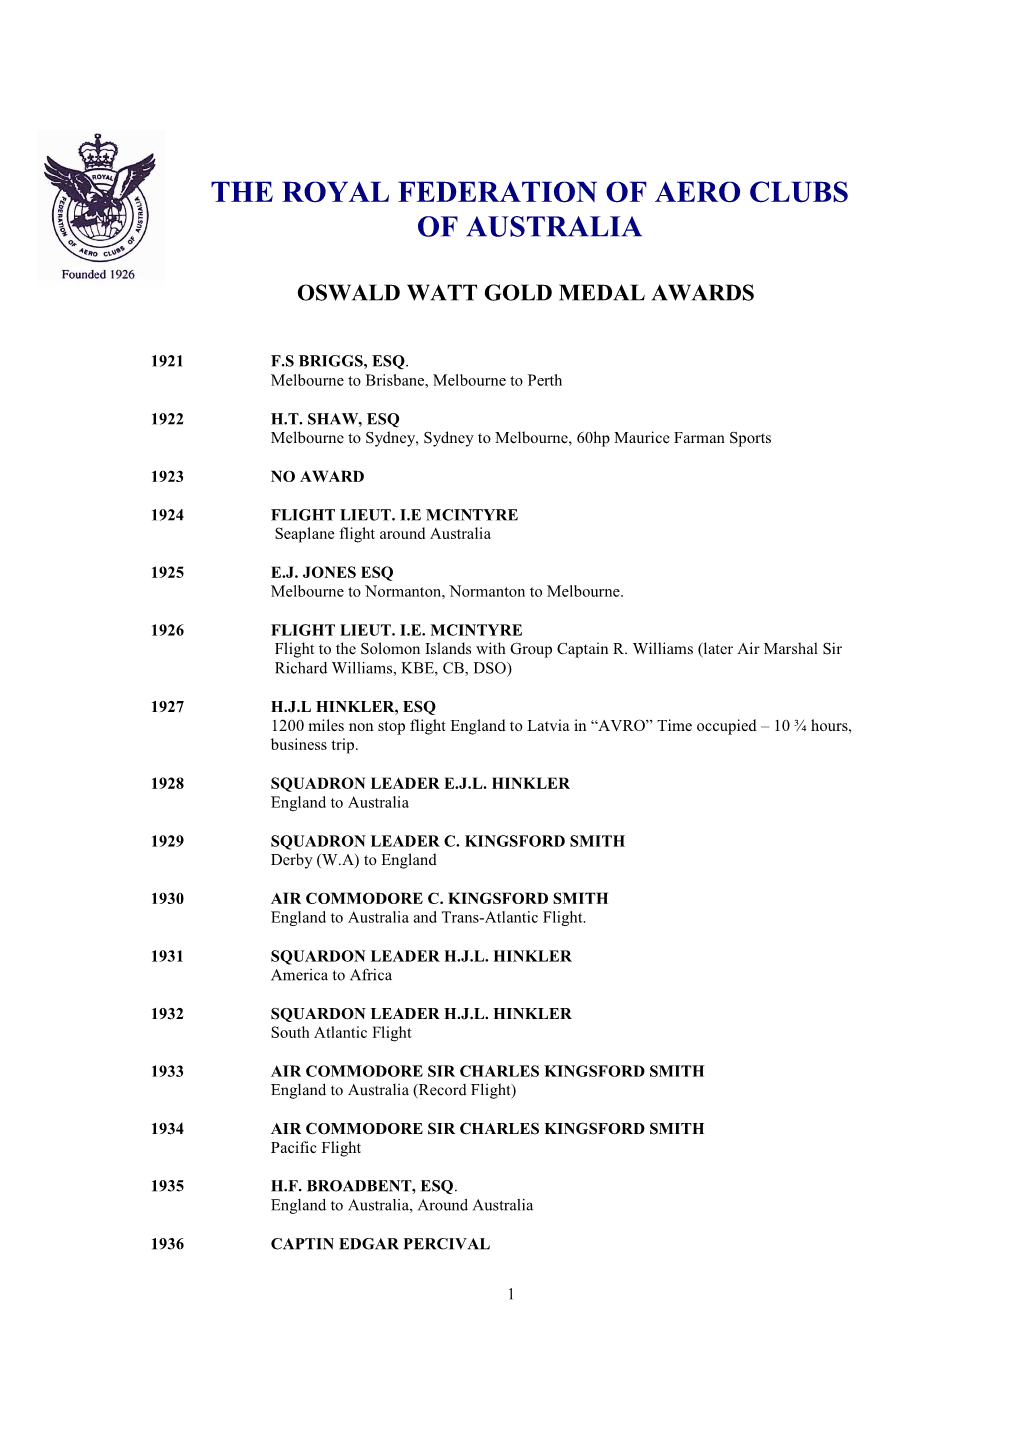 List of Recipients of Os Watt Gold Medal